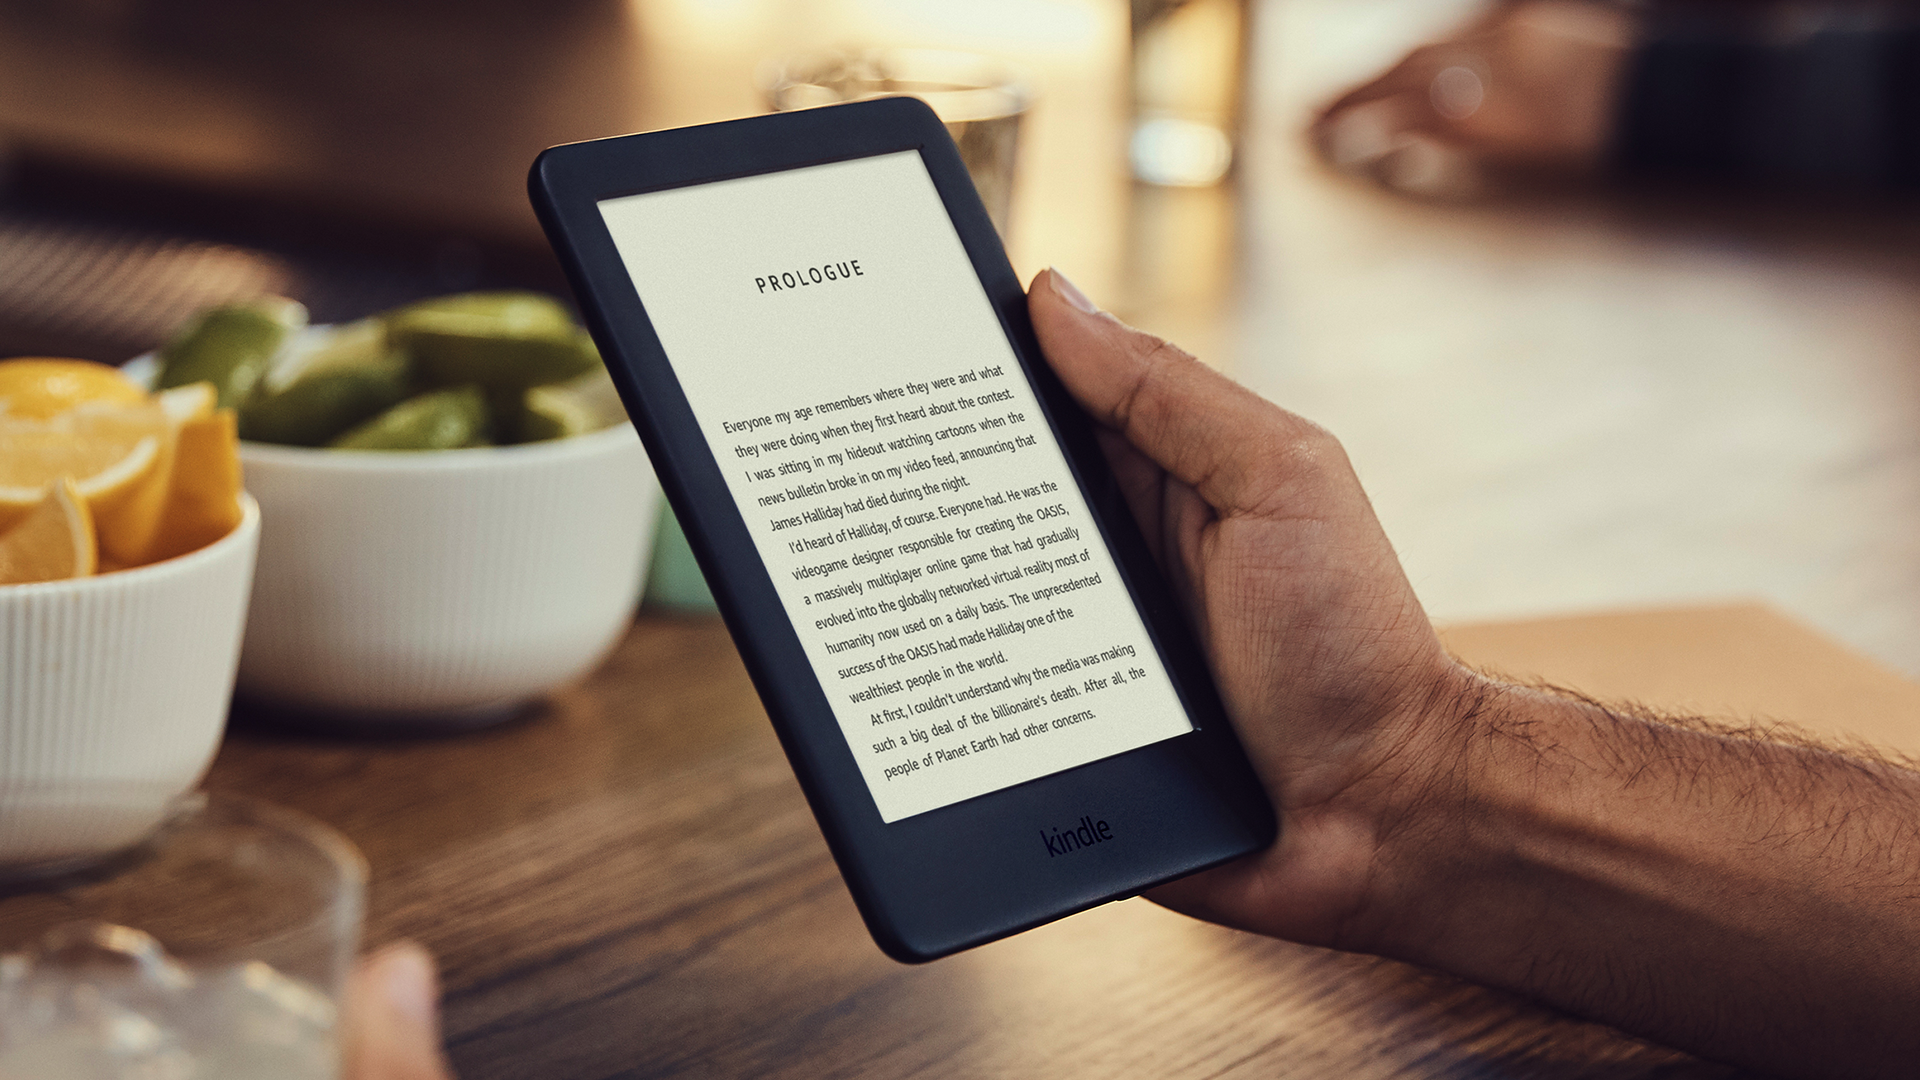 The Amazon Kindle e-reader.